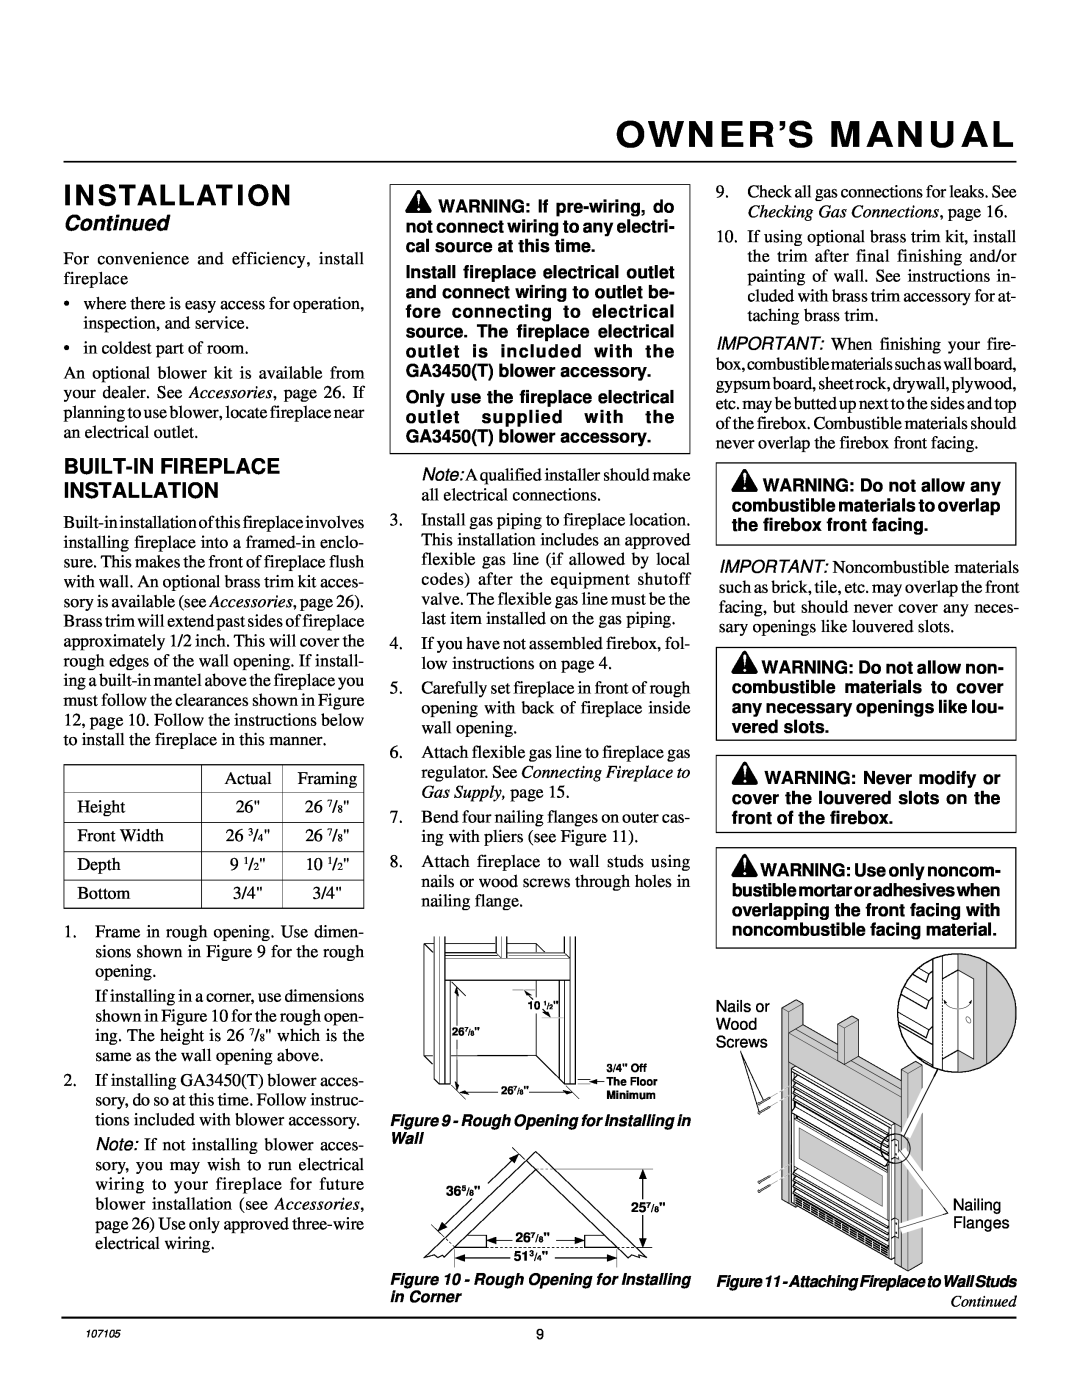 Desa FMH26TN 14 installation manual Built-Infireplace Installation, Continued 